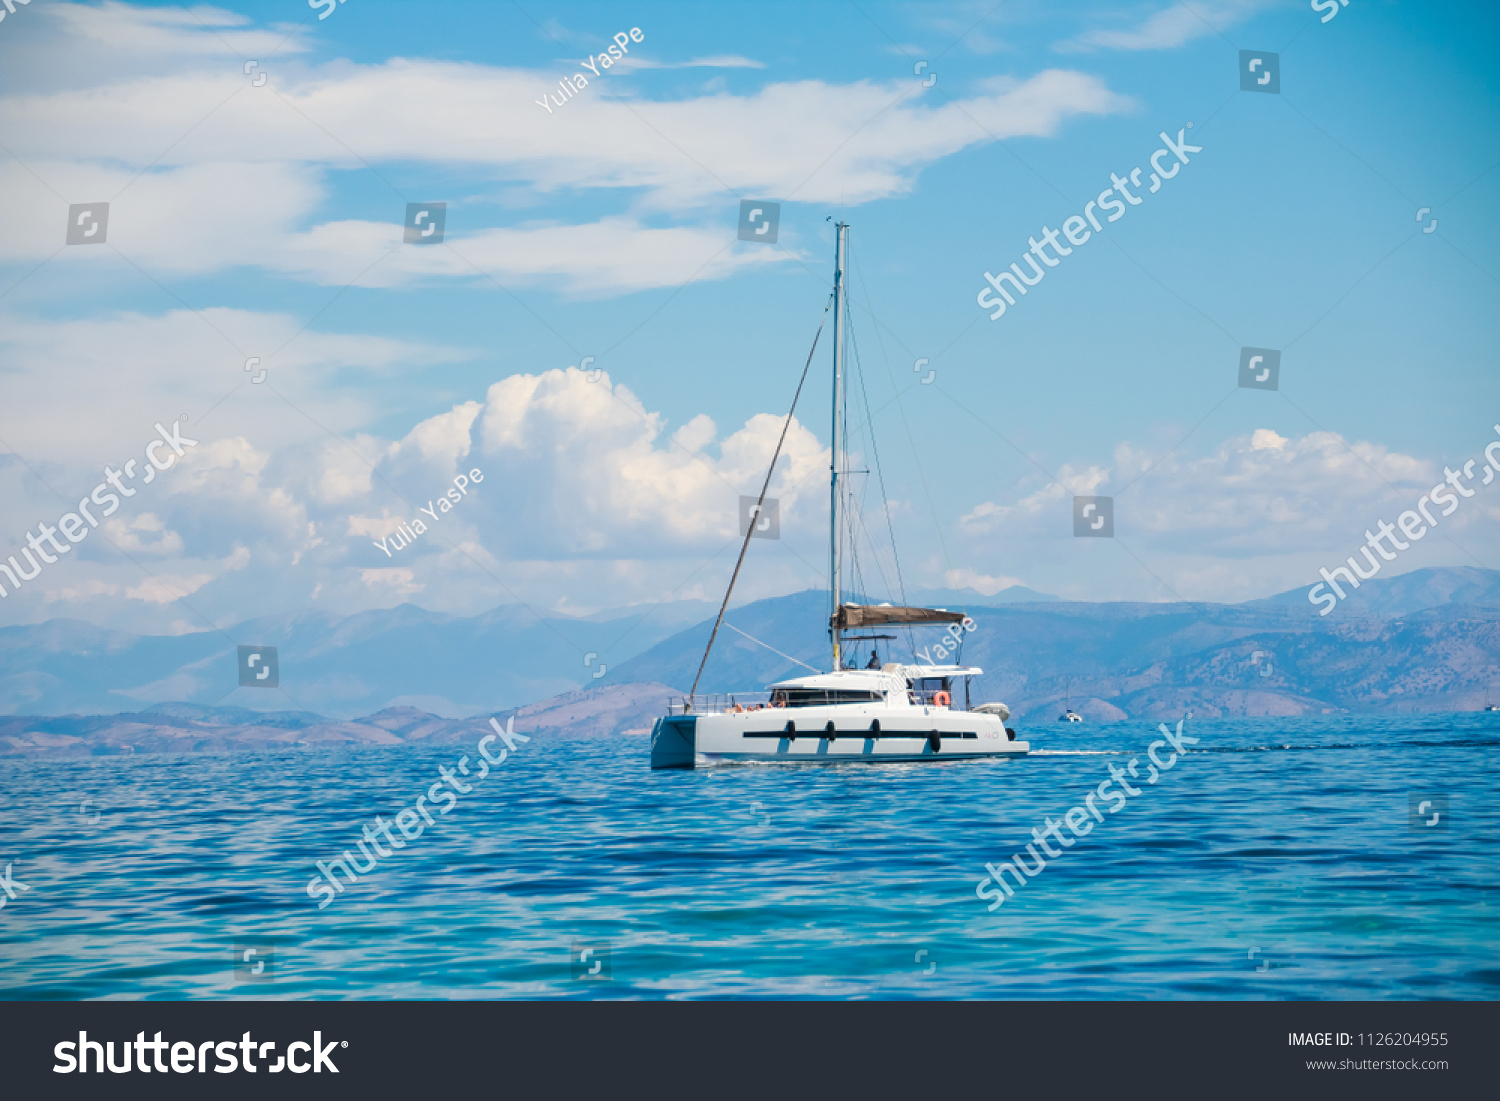 Asingle catamaran in the open sea.Sailboat in the Mediterranean Sea.catamaran sailing boat near coast.catamaran sail boat docked in tropical clear waters.Trendy colors. aqua menthe .Copy space #1126204955